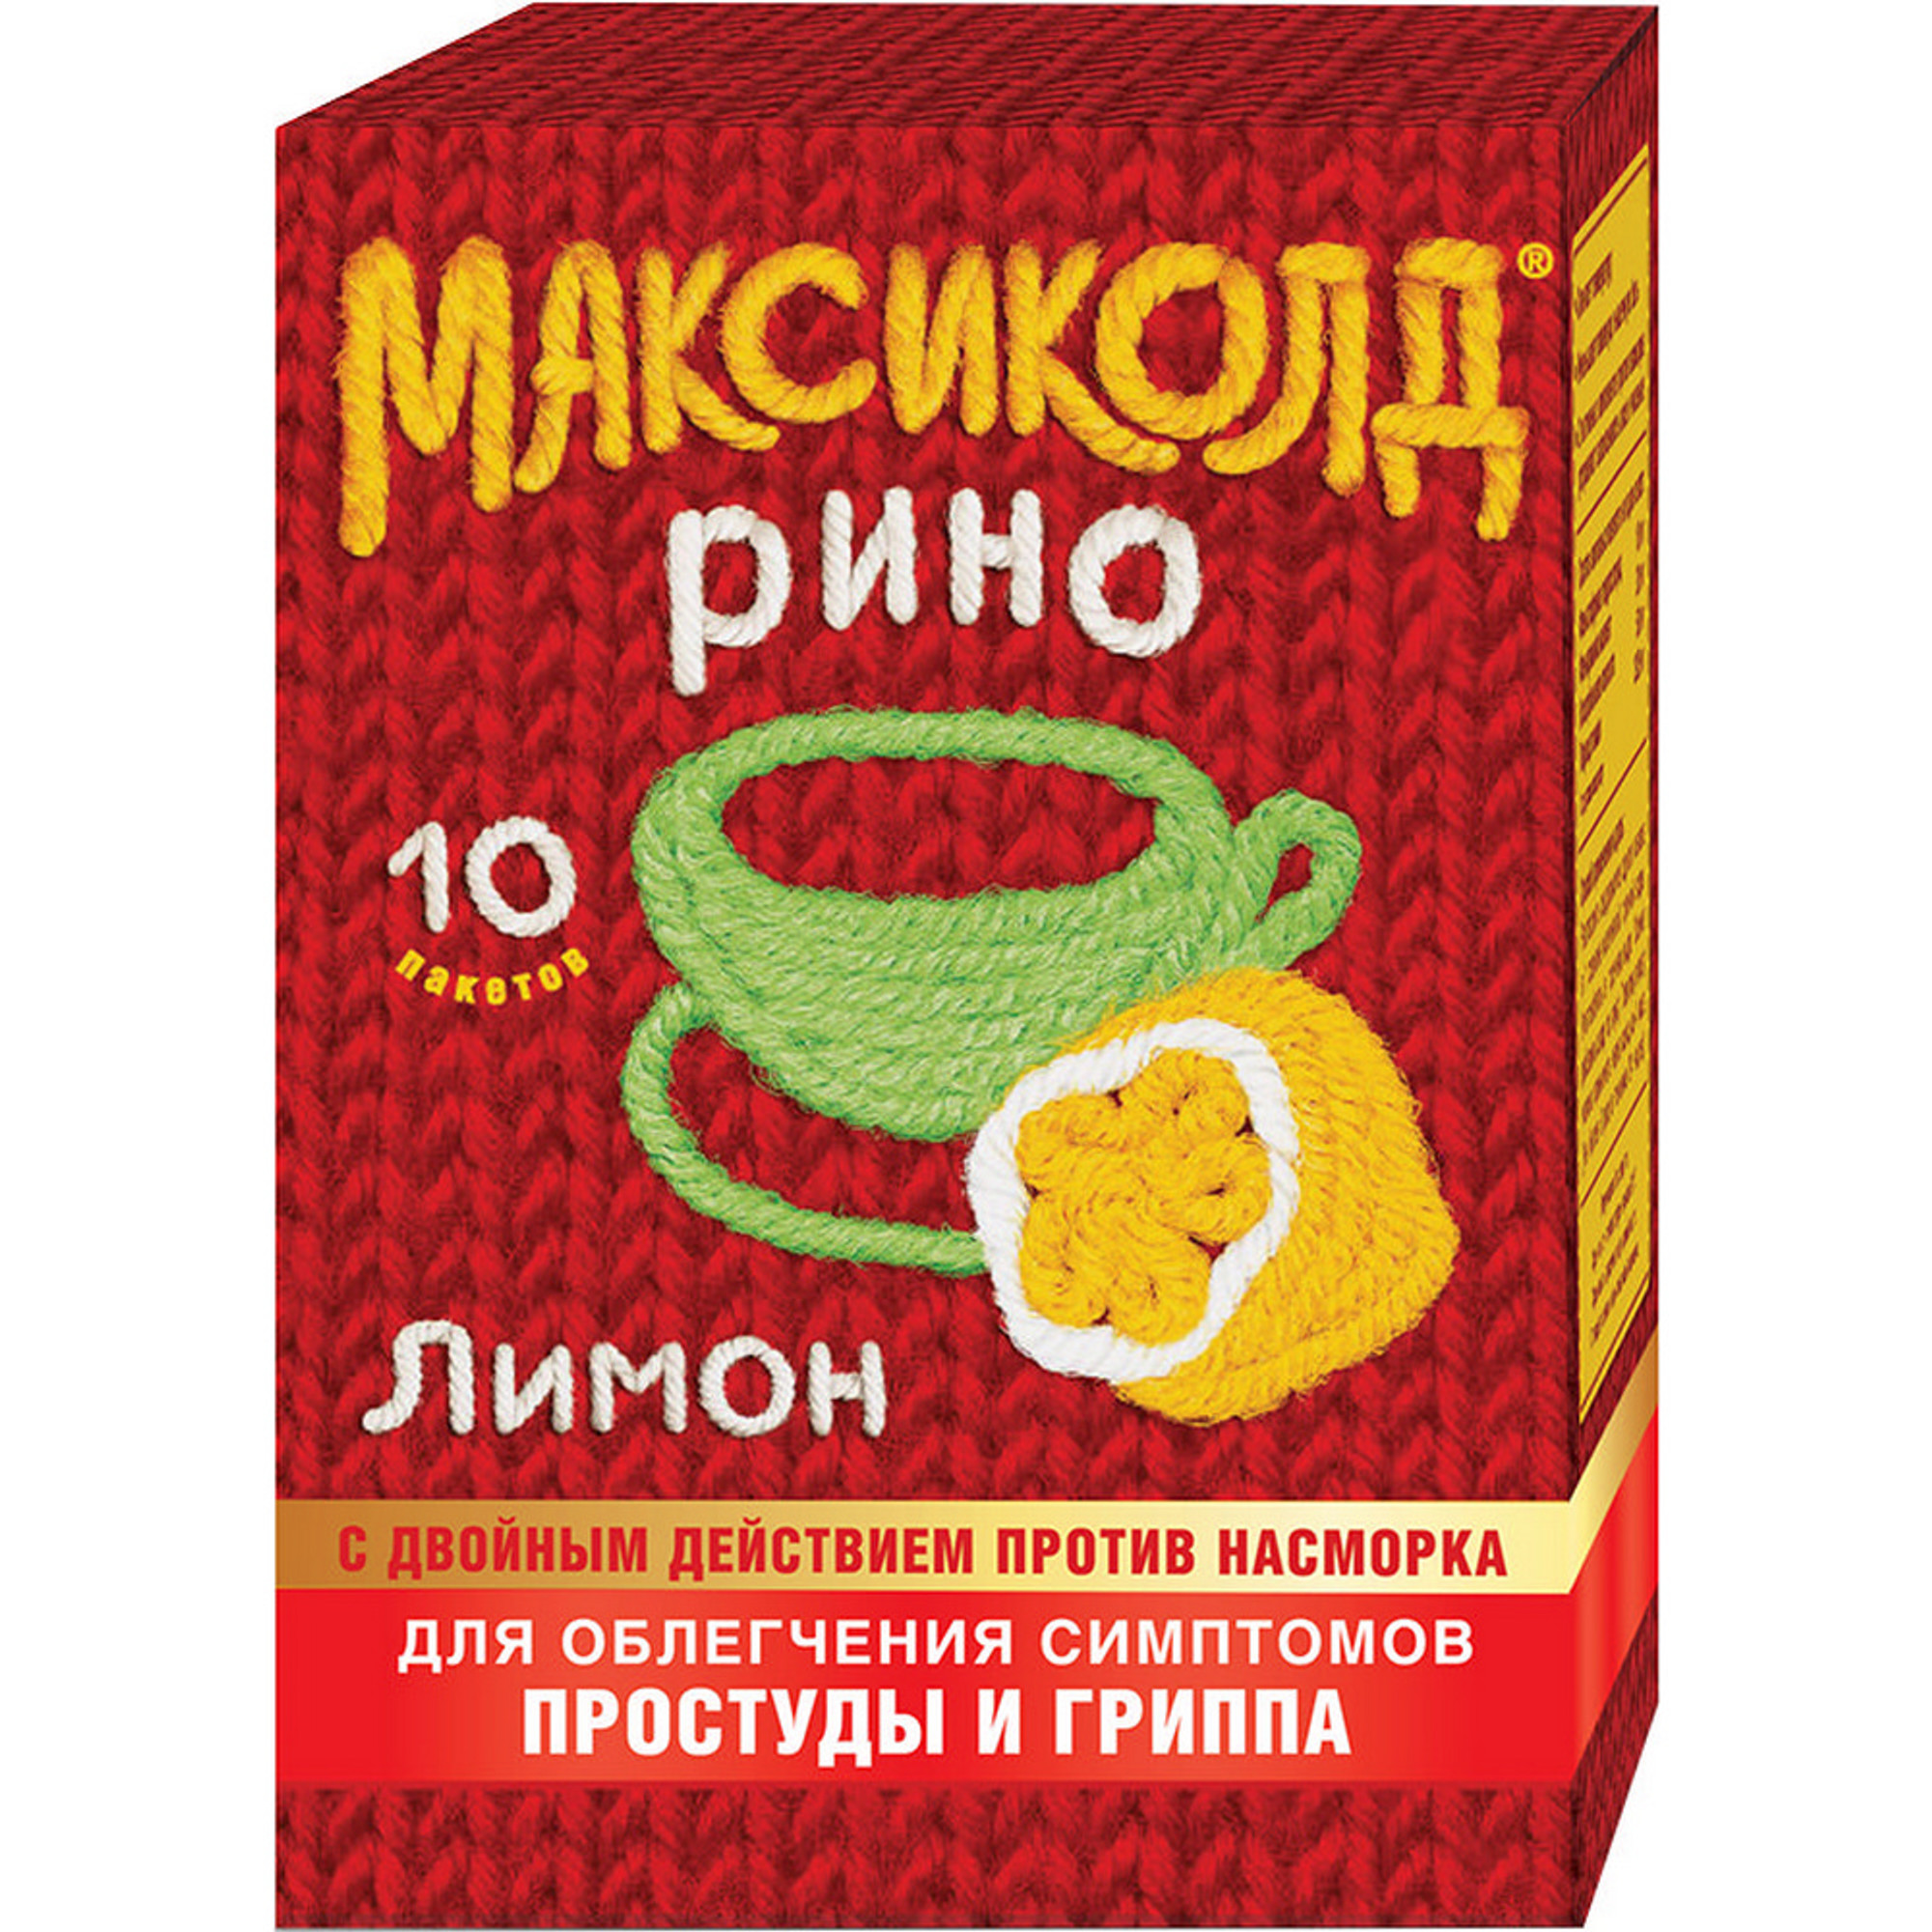 Максиколд Рино, порошок (лимон), пакетики 15 г, 10 шт. максиколд рино порошок лимон пакетики 15 г 10 шт